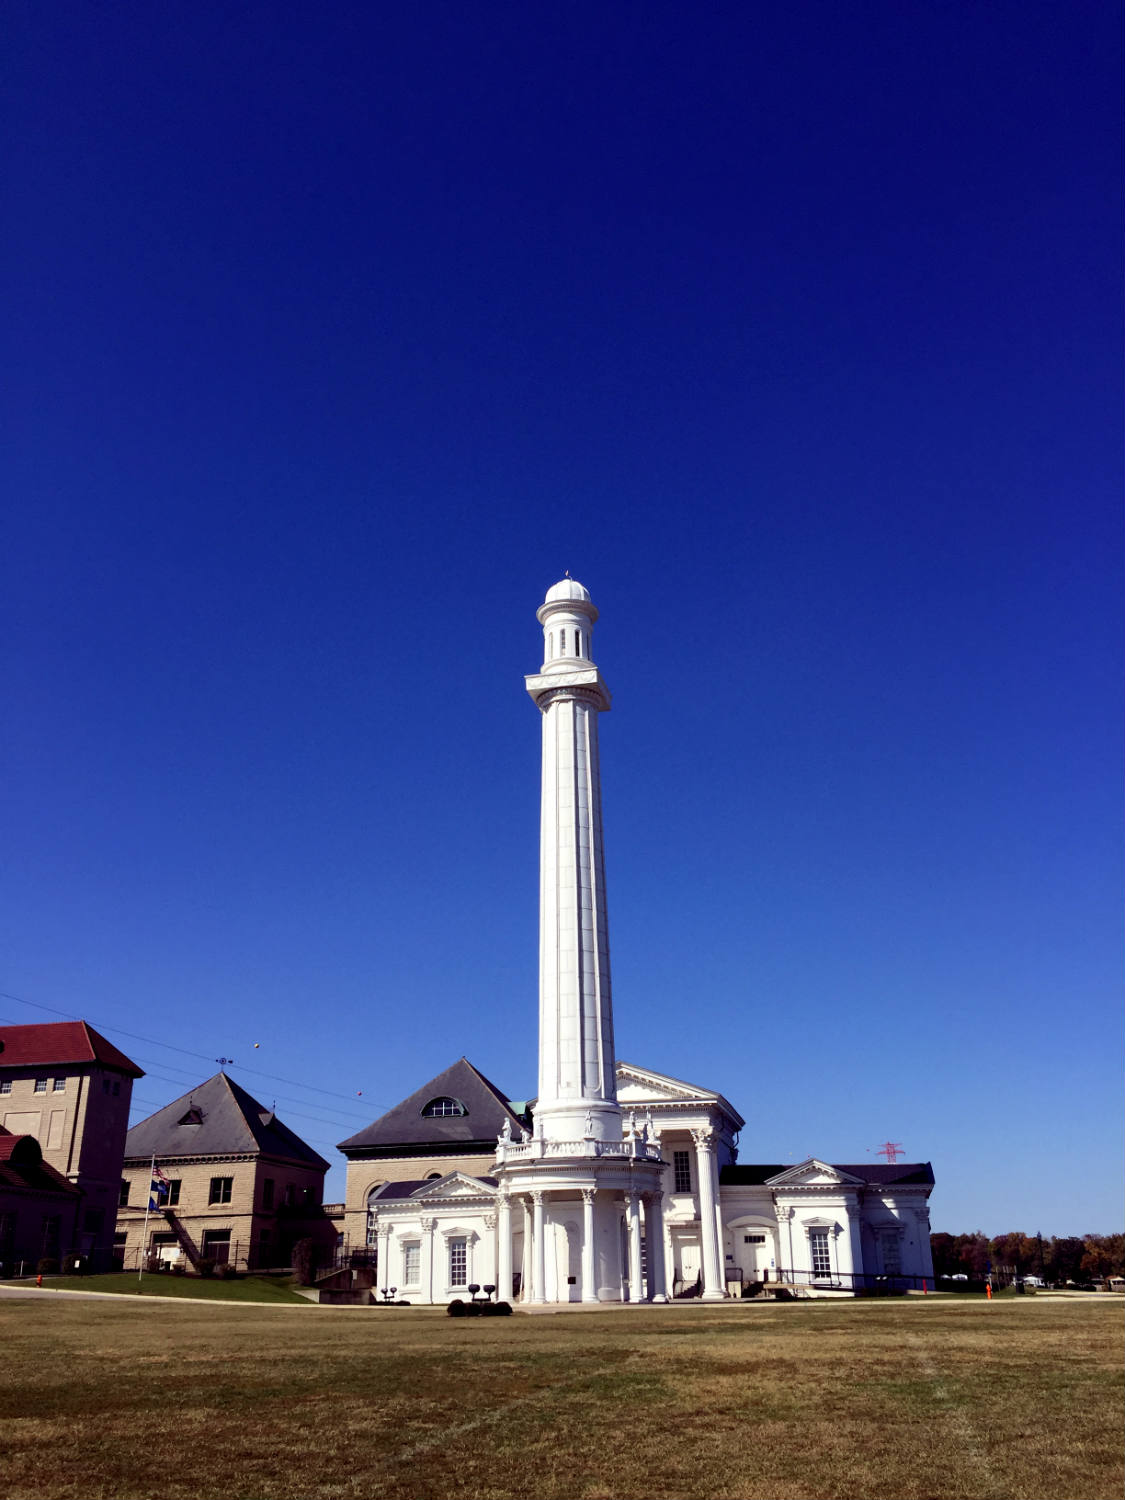 Louisville Water Tower Museum in Kentucky